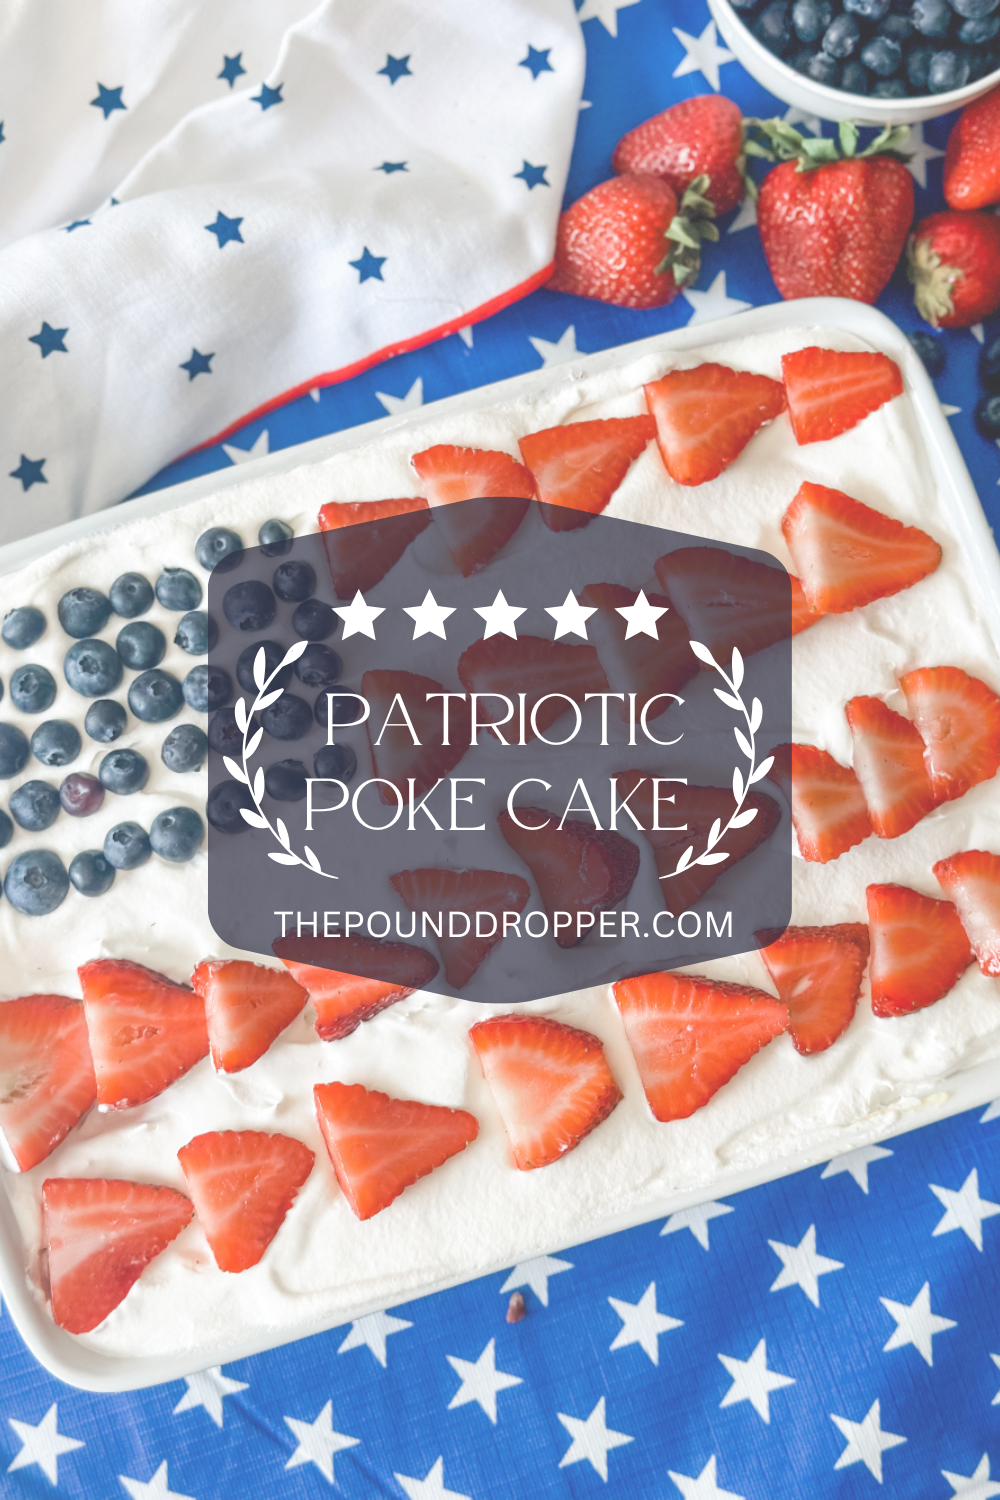 WW Patriotic Poke Cake via @pounddropper